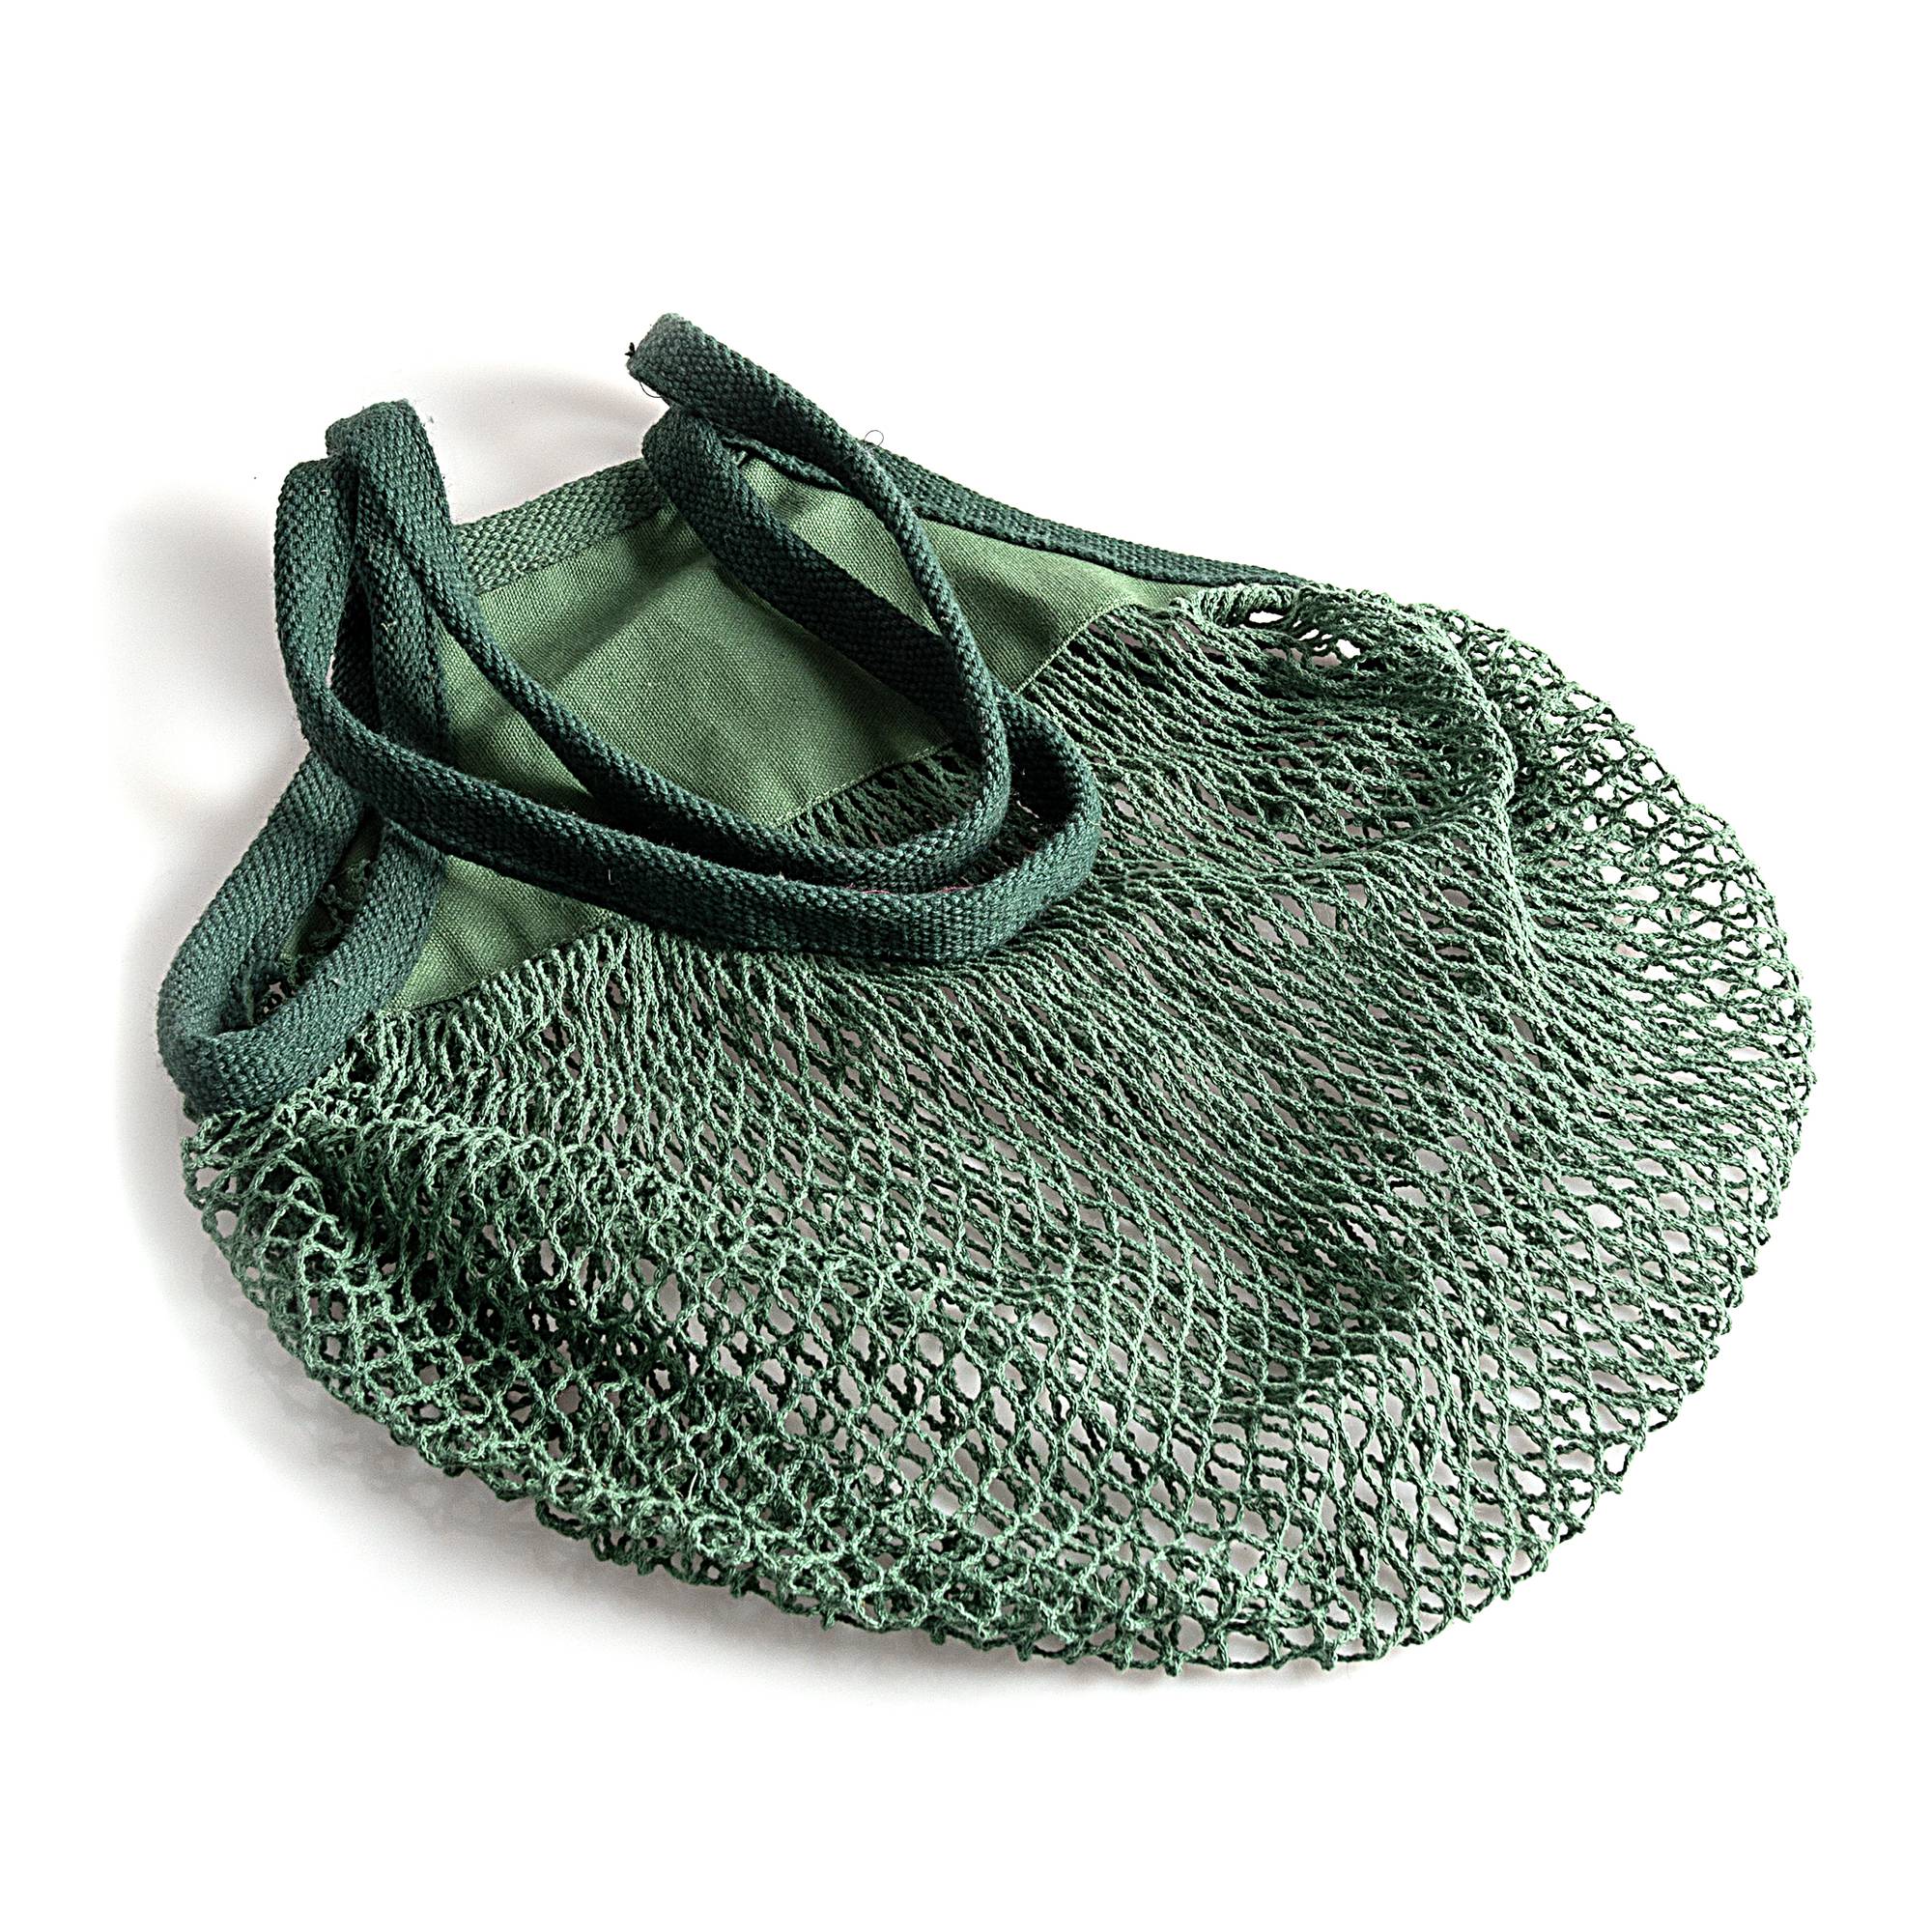 664464 1001 1 hobbycraft mesh shopping bag green khaki